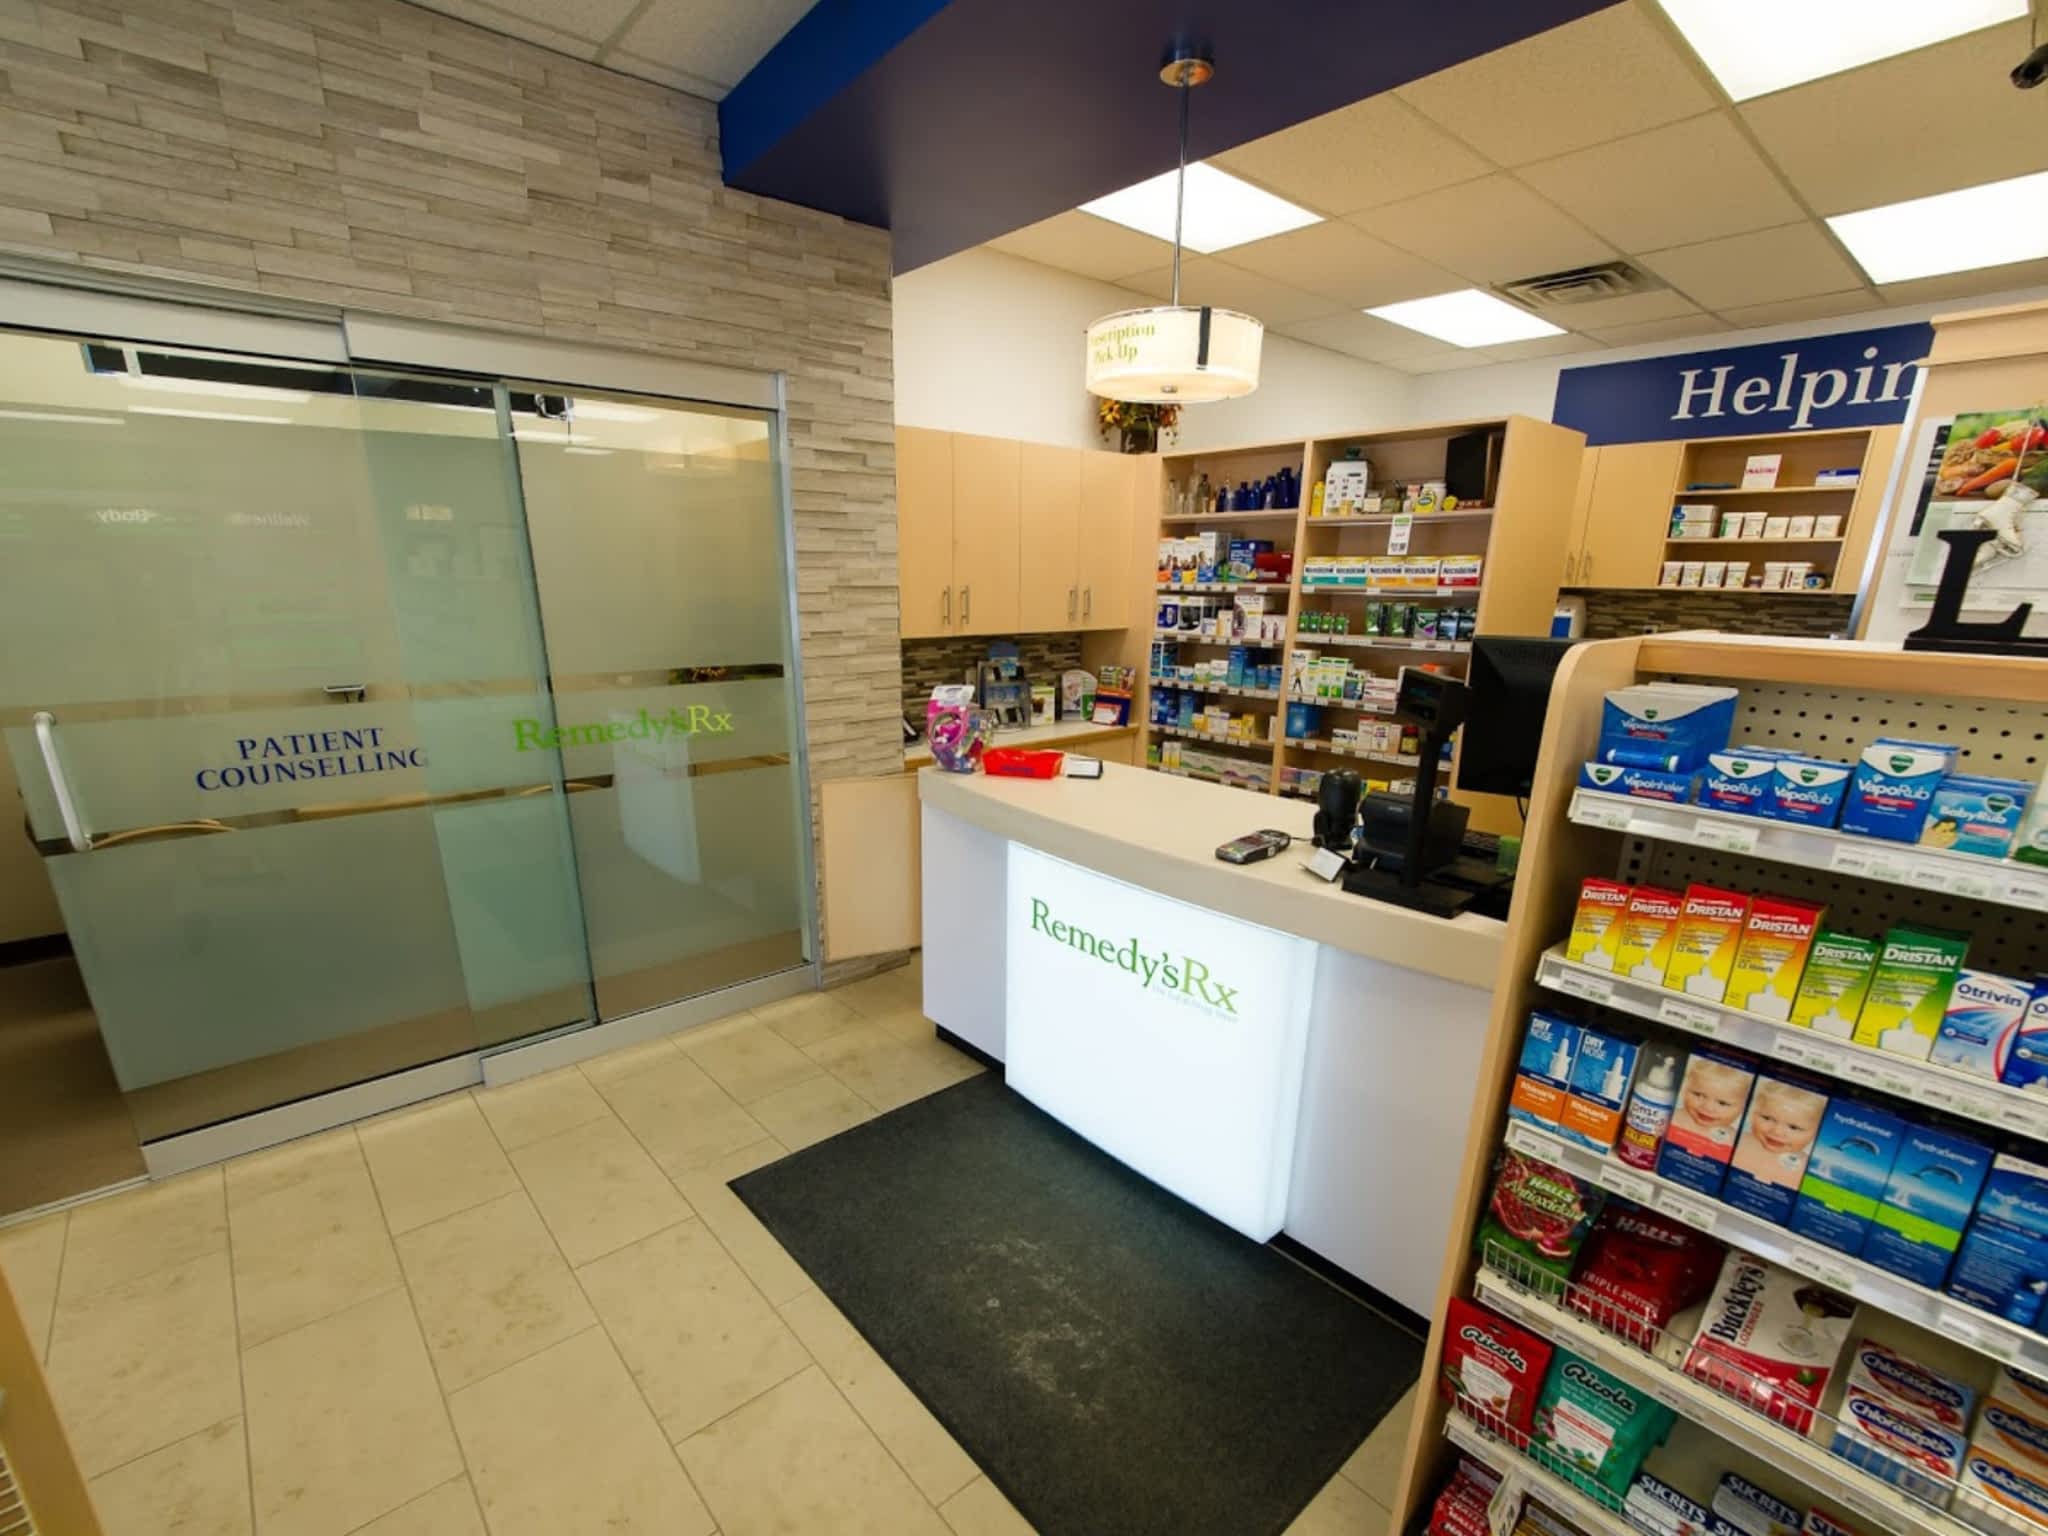 photo Lakeside Pharmacy